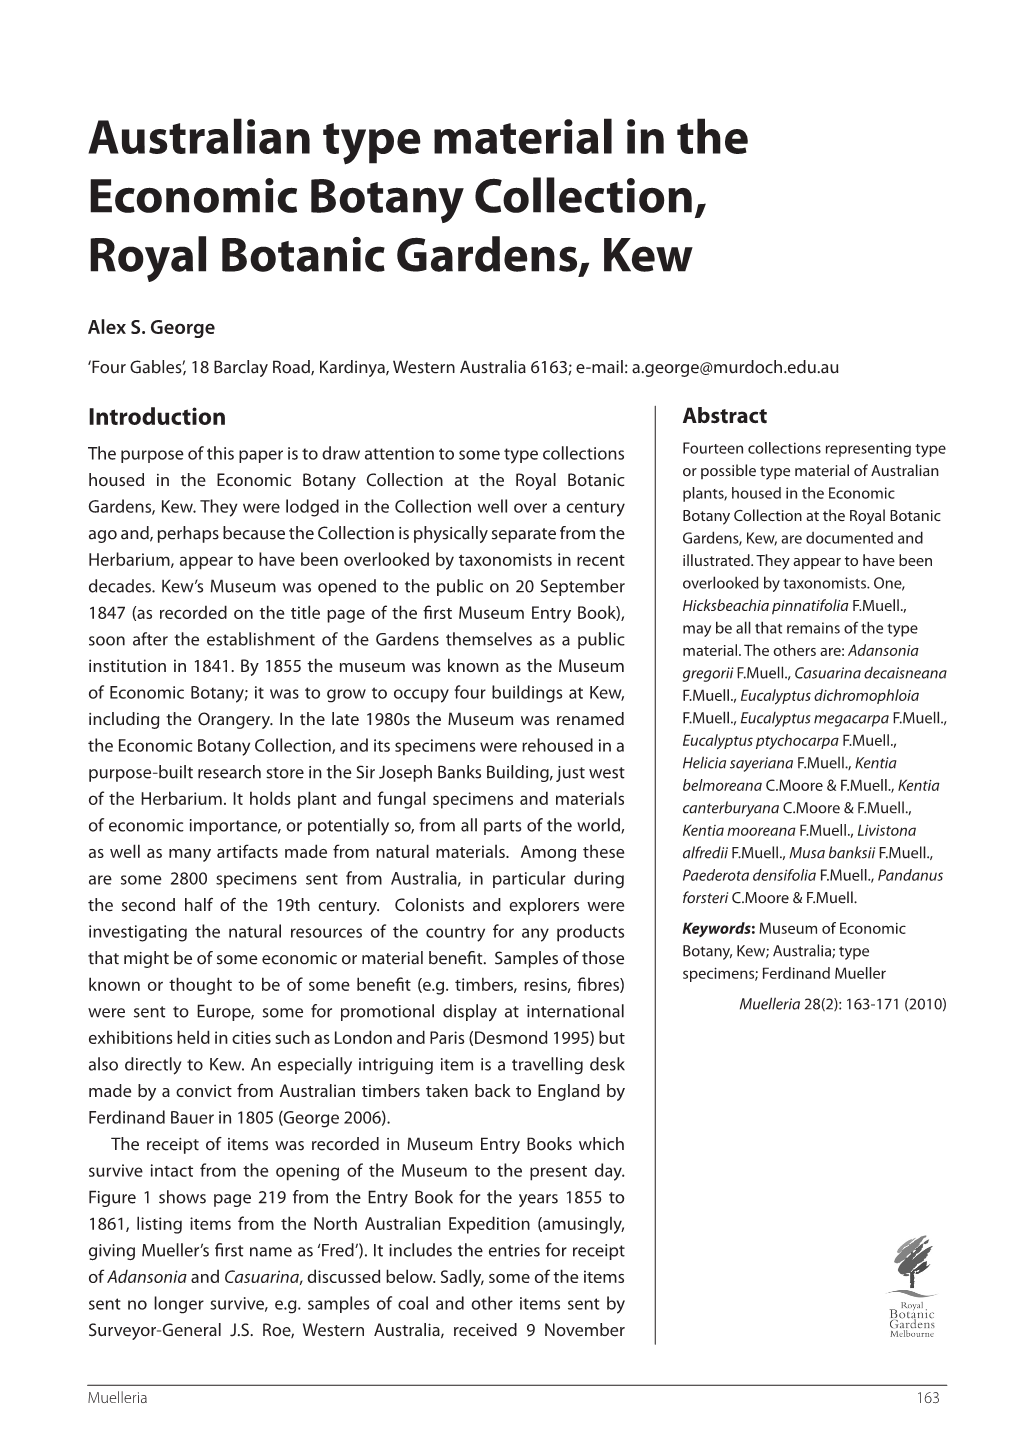 Australian Type Material in the Economic Botany Collection, Royal Botanic Gardens, Kew